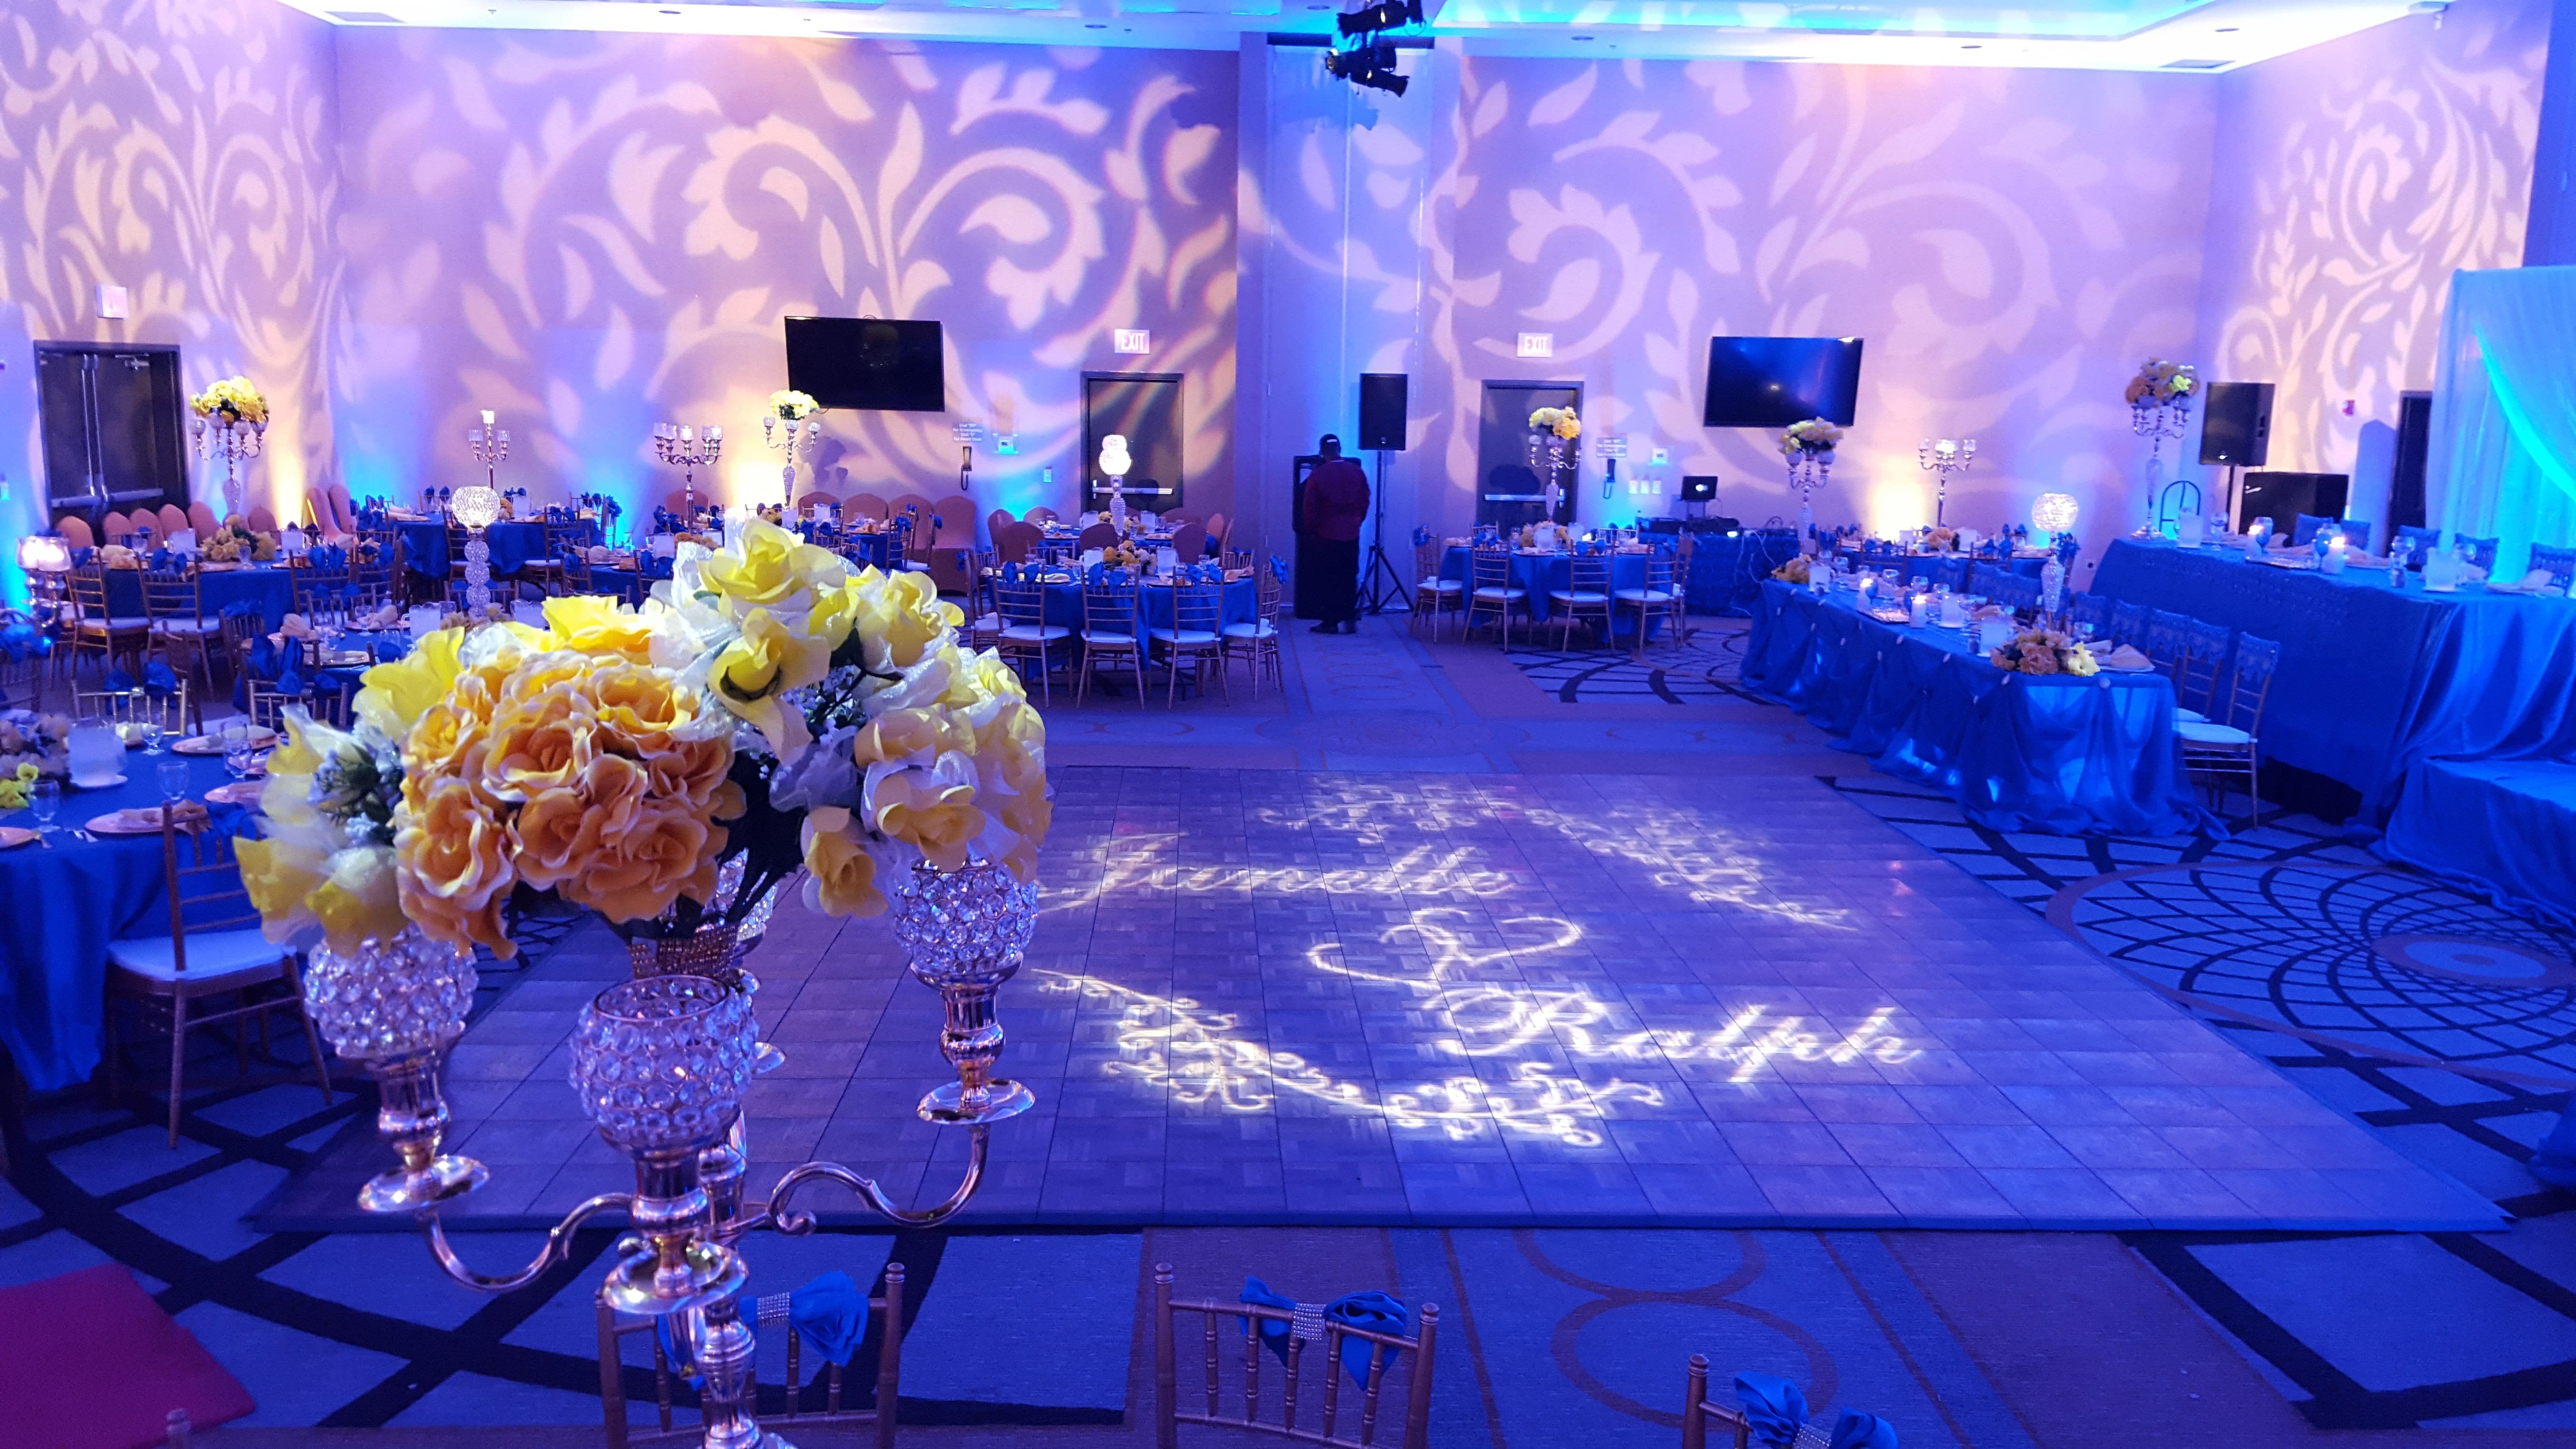 A wedding monogram projected on the dance floor.